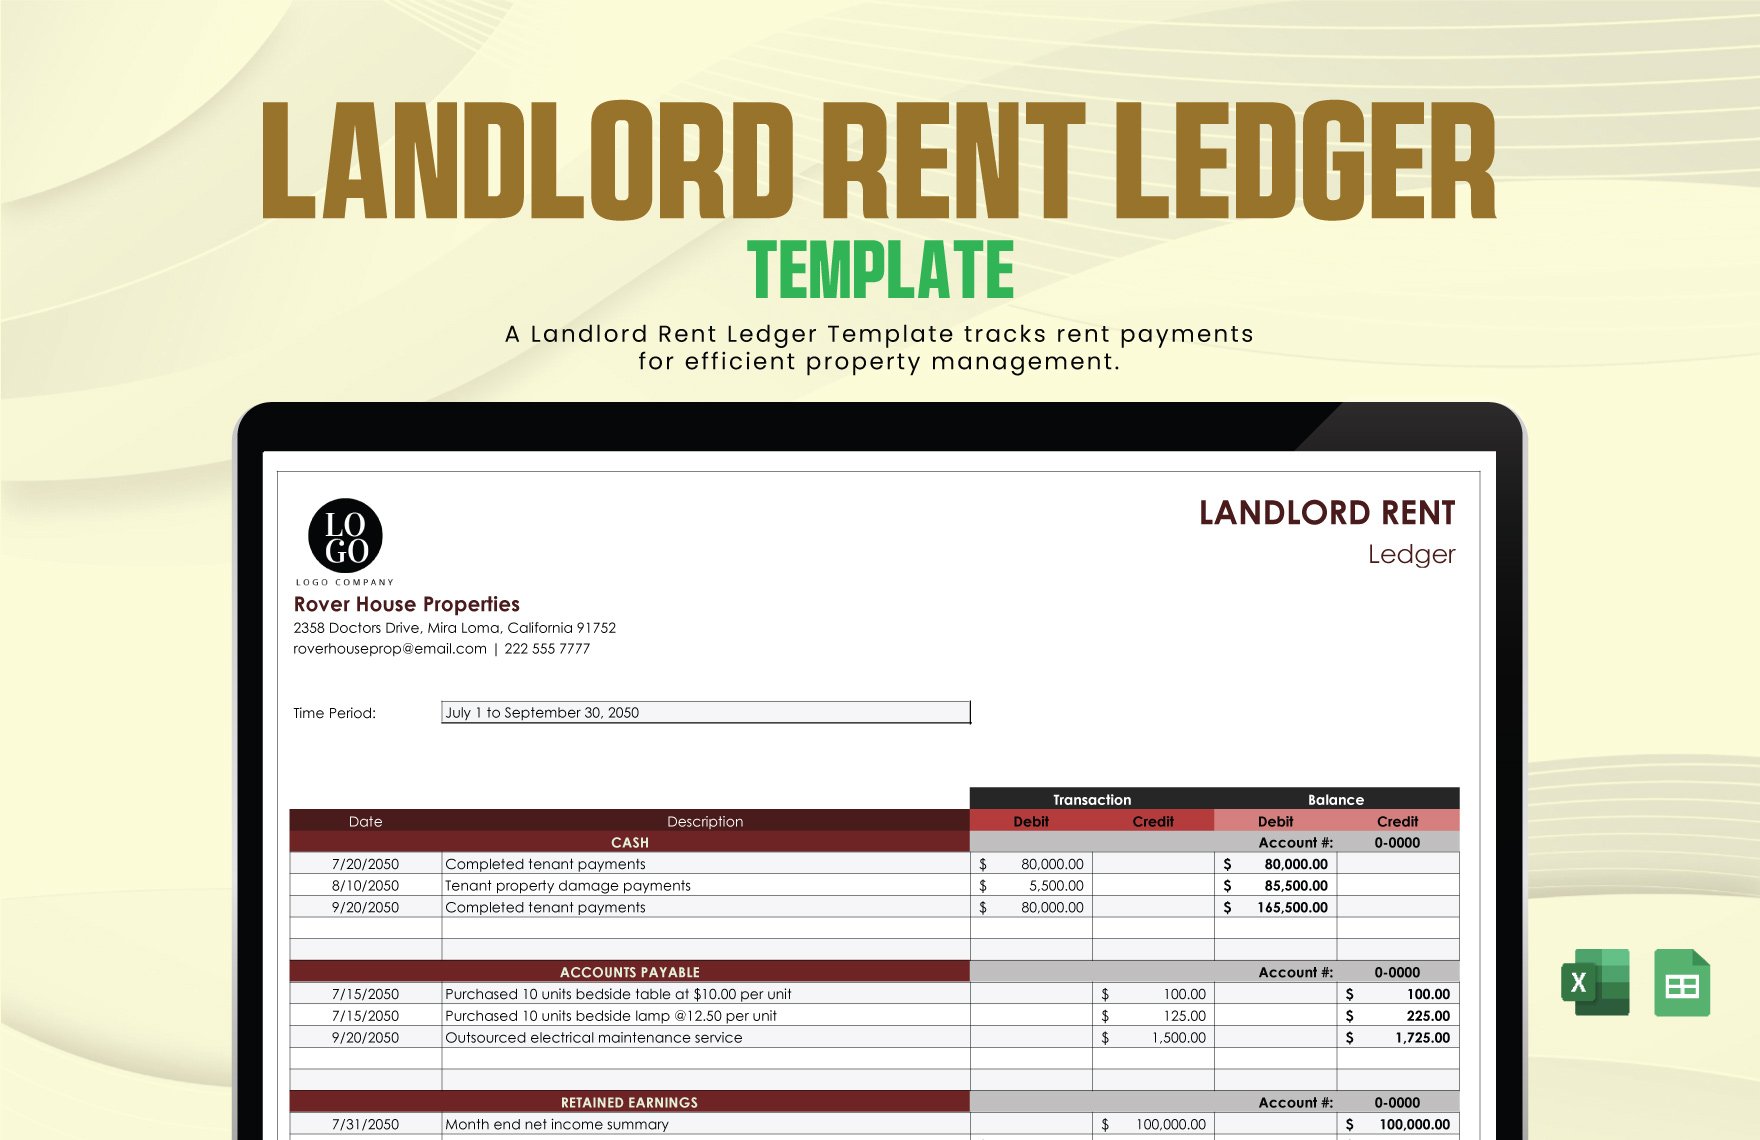 Landlord Rent Ledger Template in Excel, Google Sheets